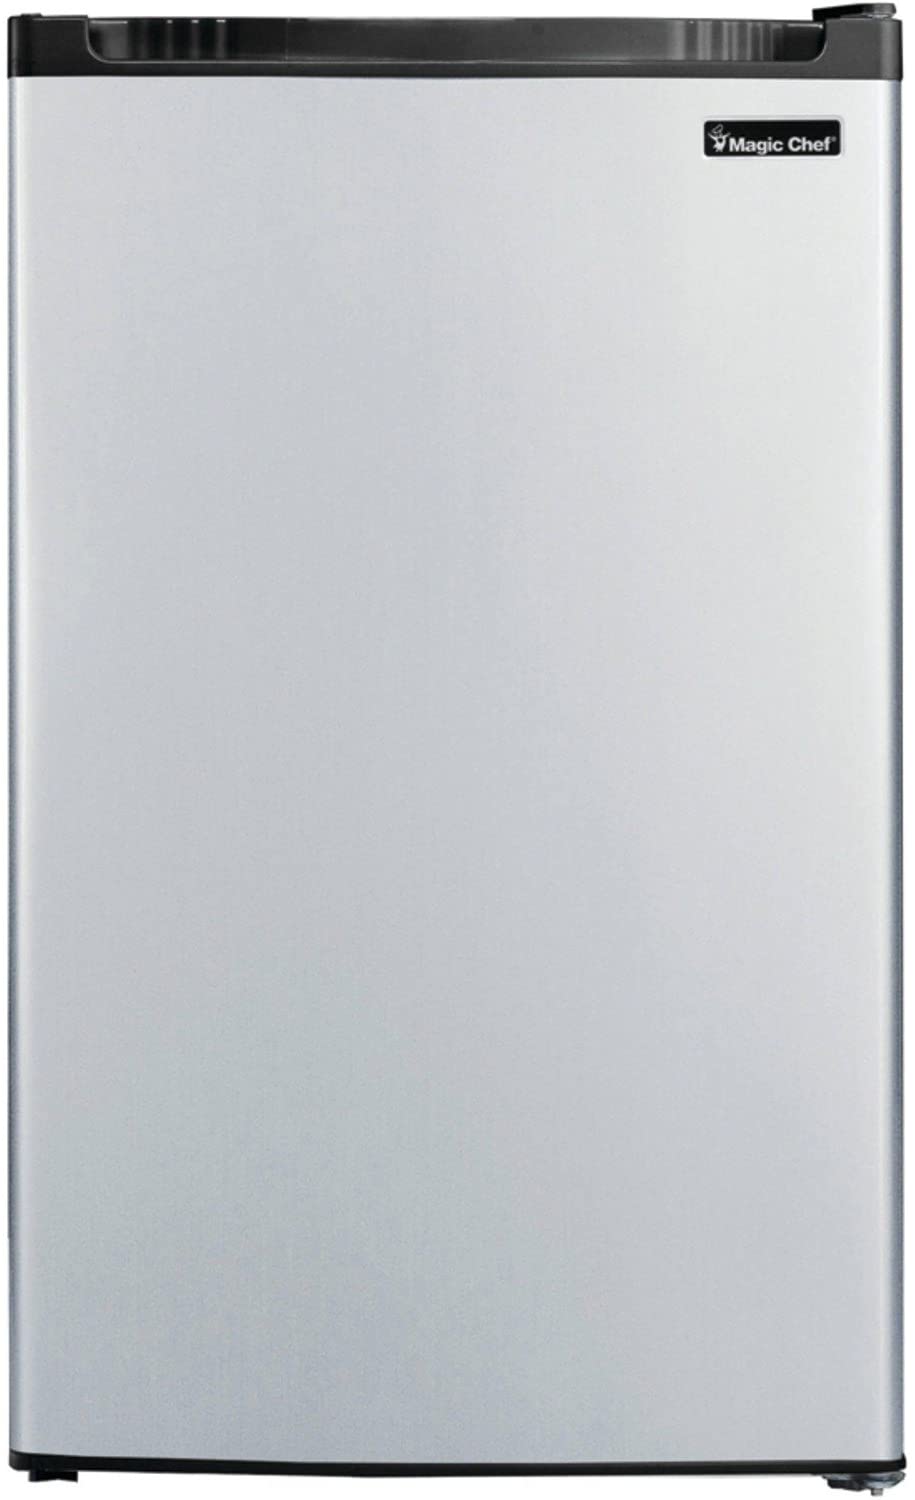 Magic Chef Compact Magic Chef - 4.4 Cu Ft Refrigerator Push Defrost